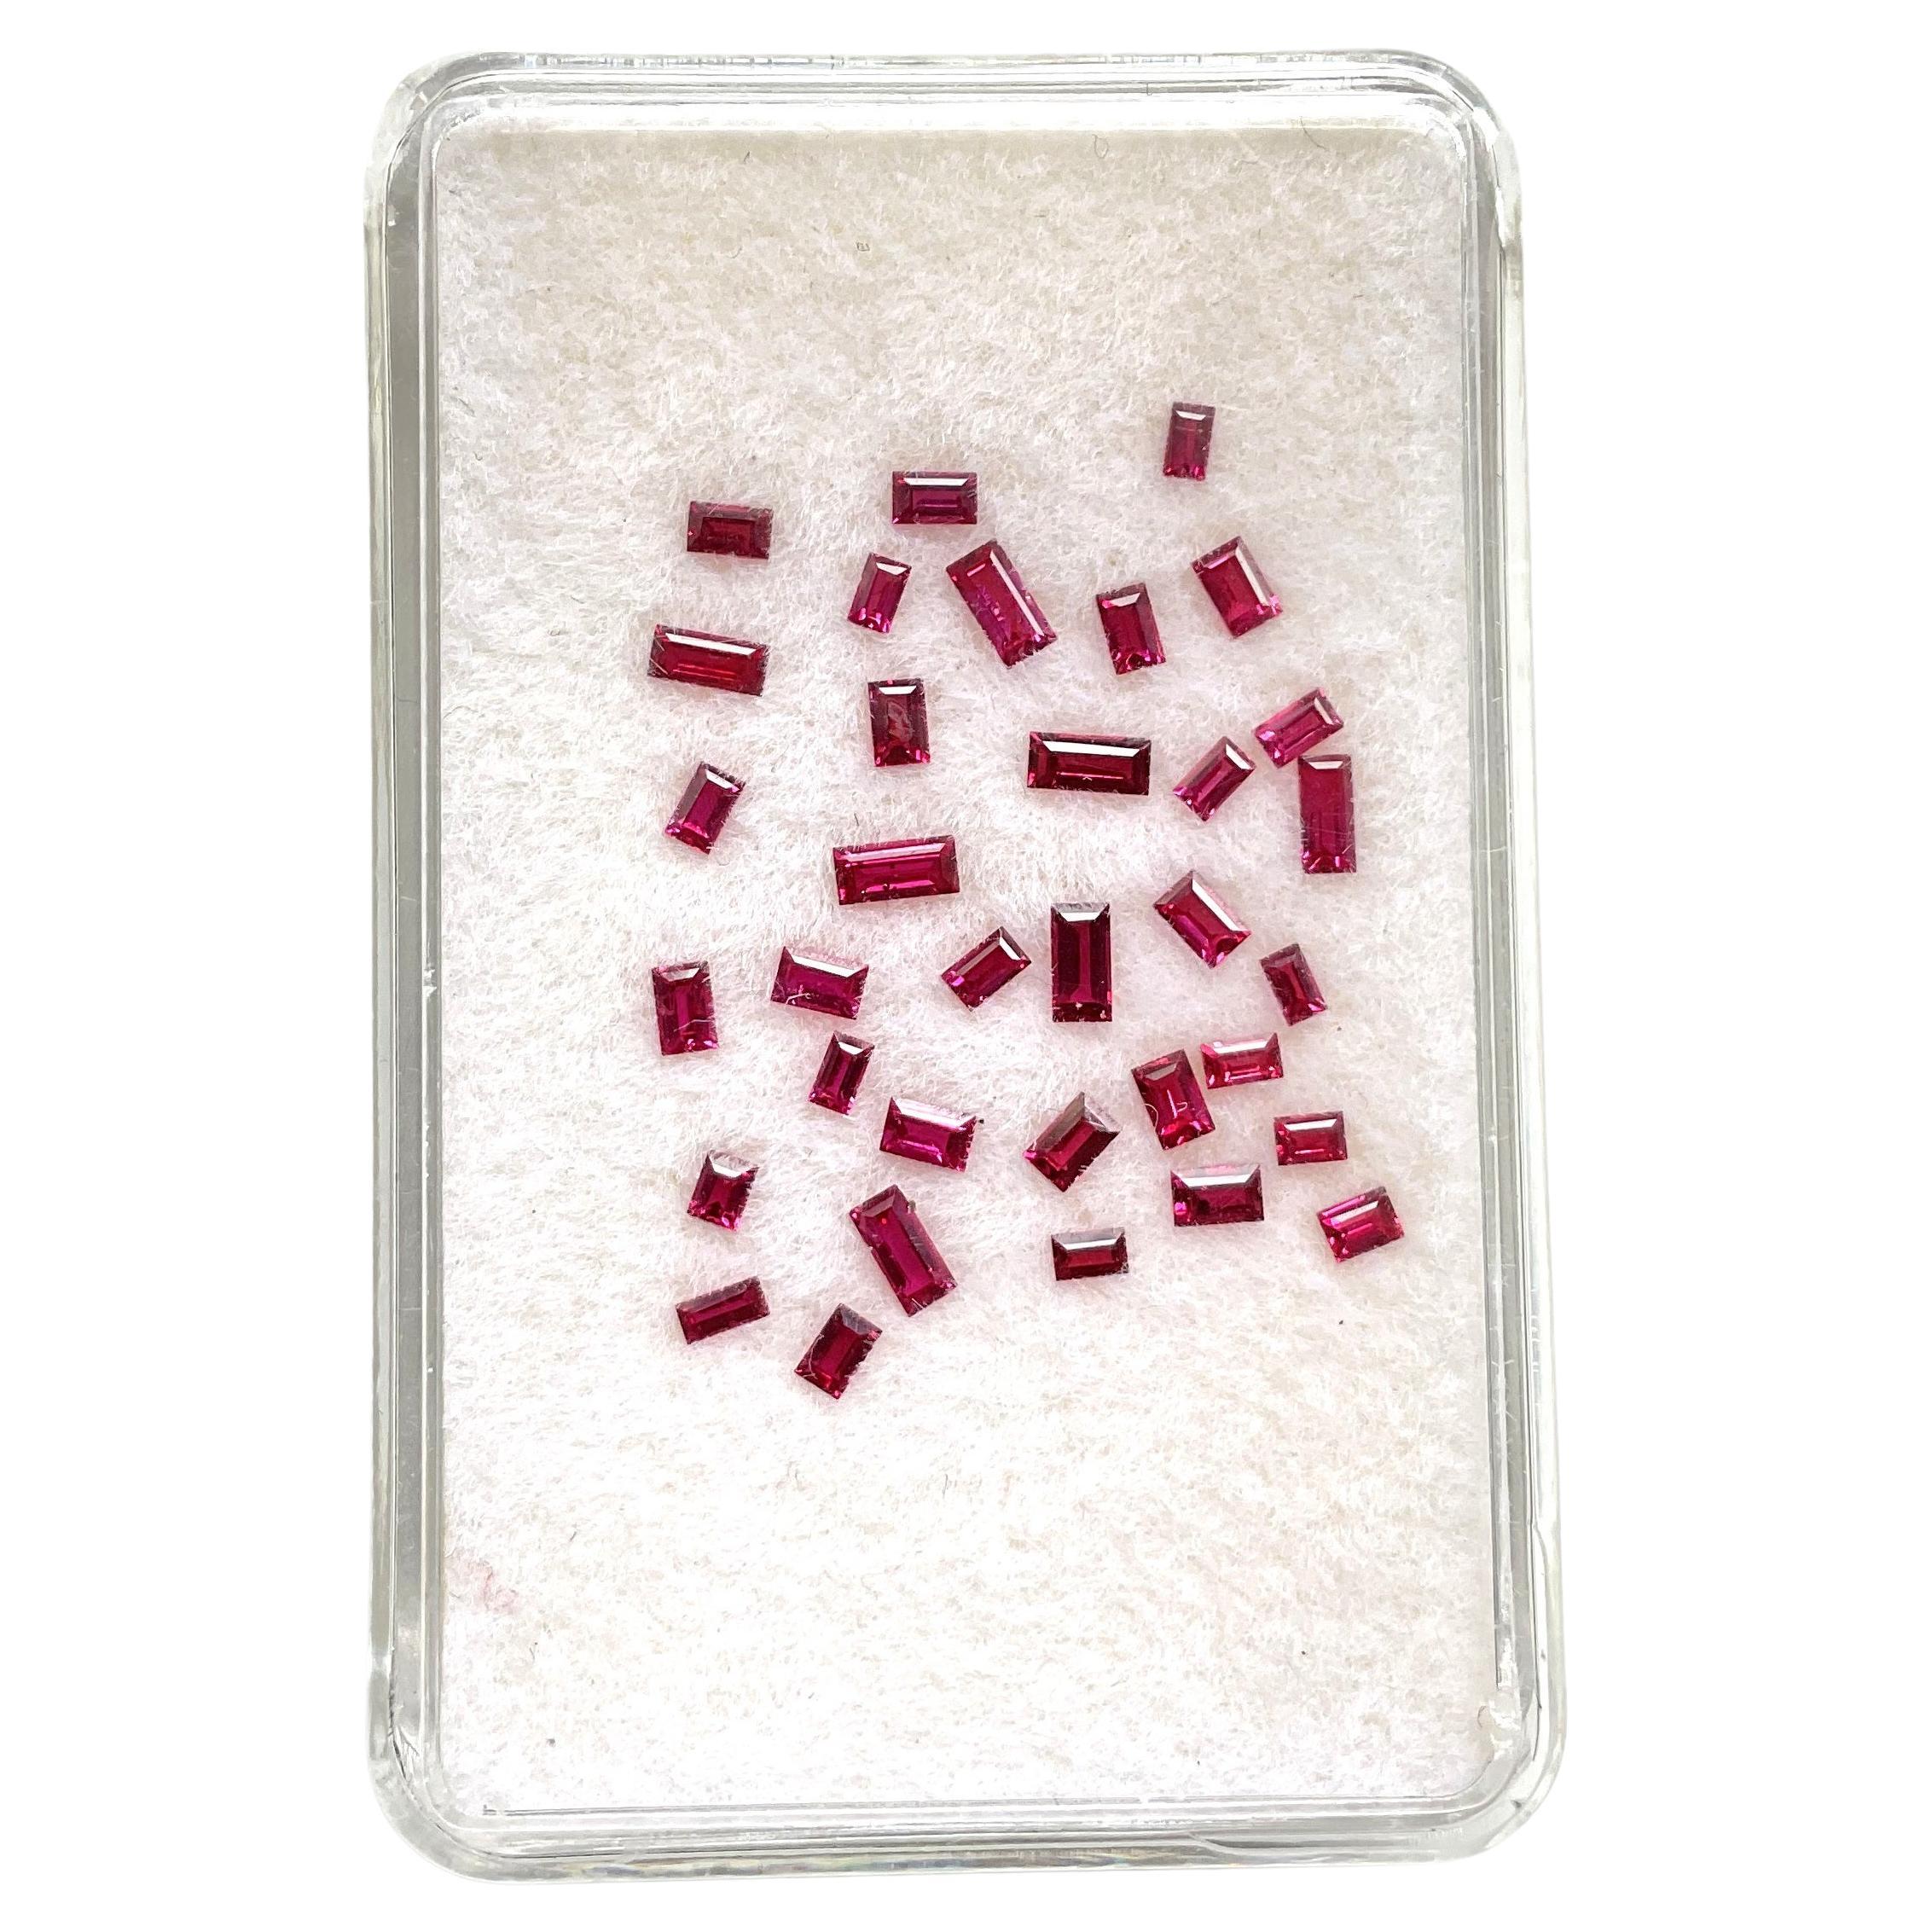 2.16 Carats Mozambique Ruby Top Quality Baguette Cut stone No Heat Natural Gem